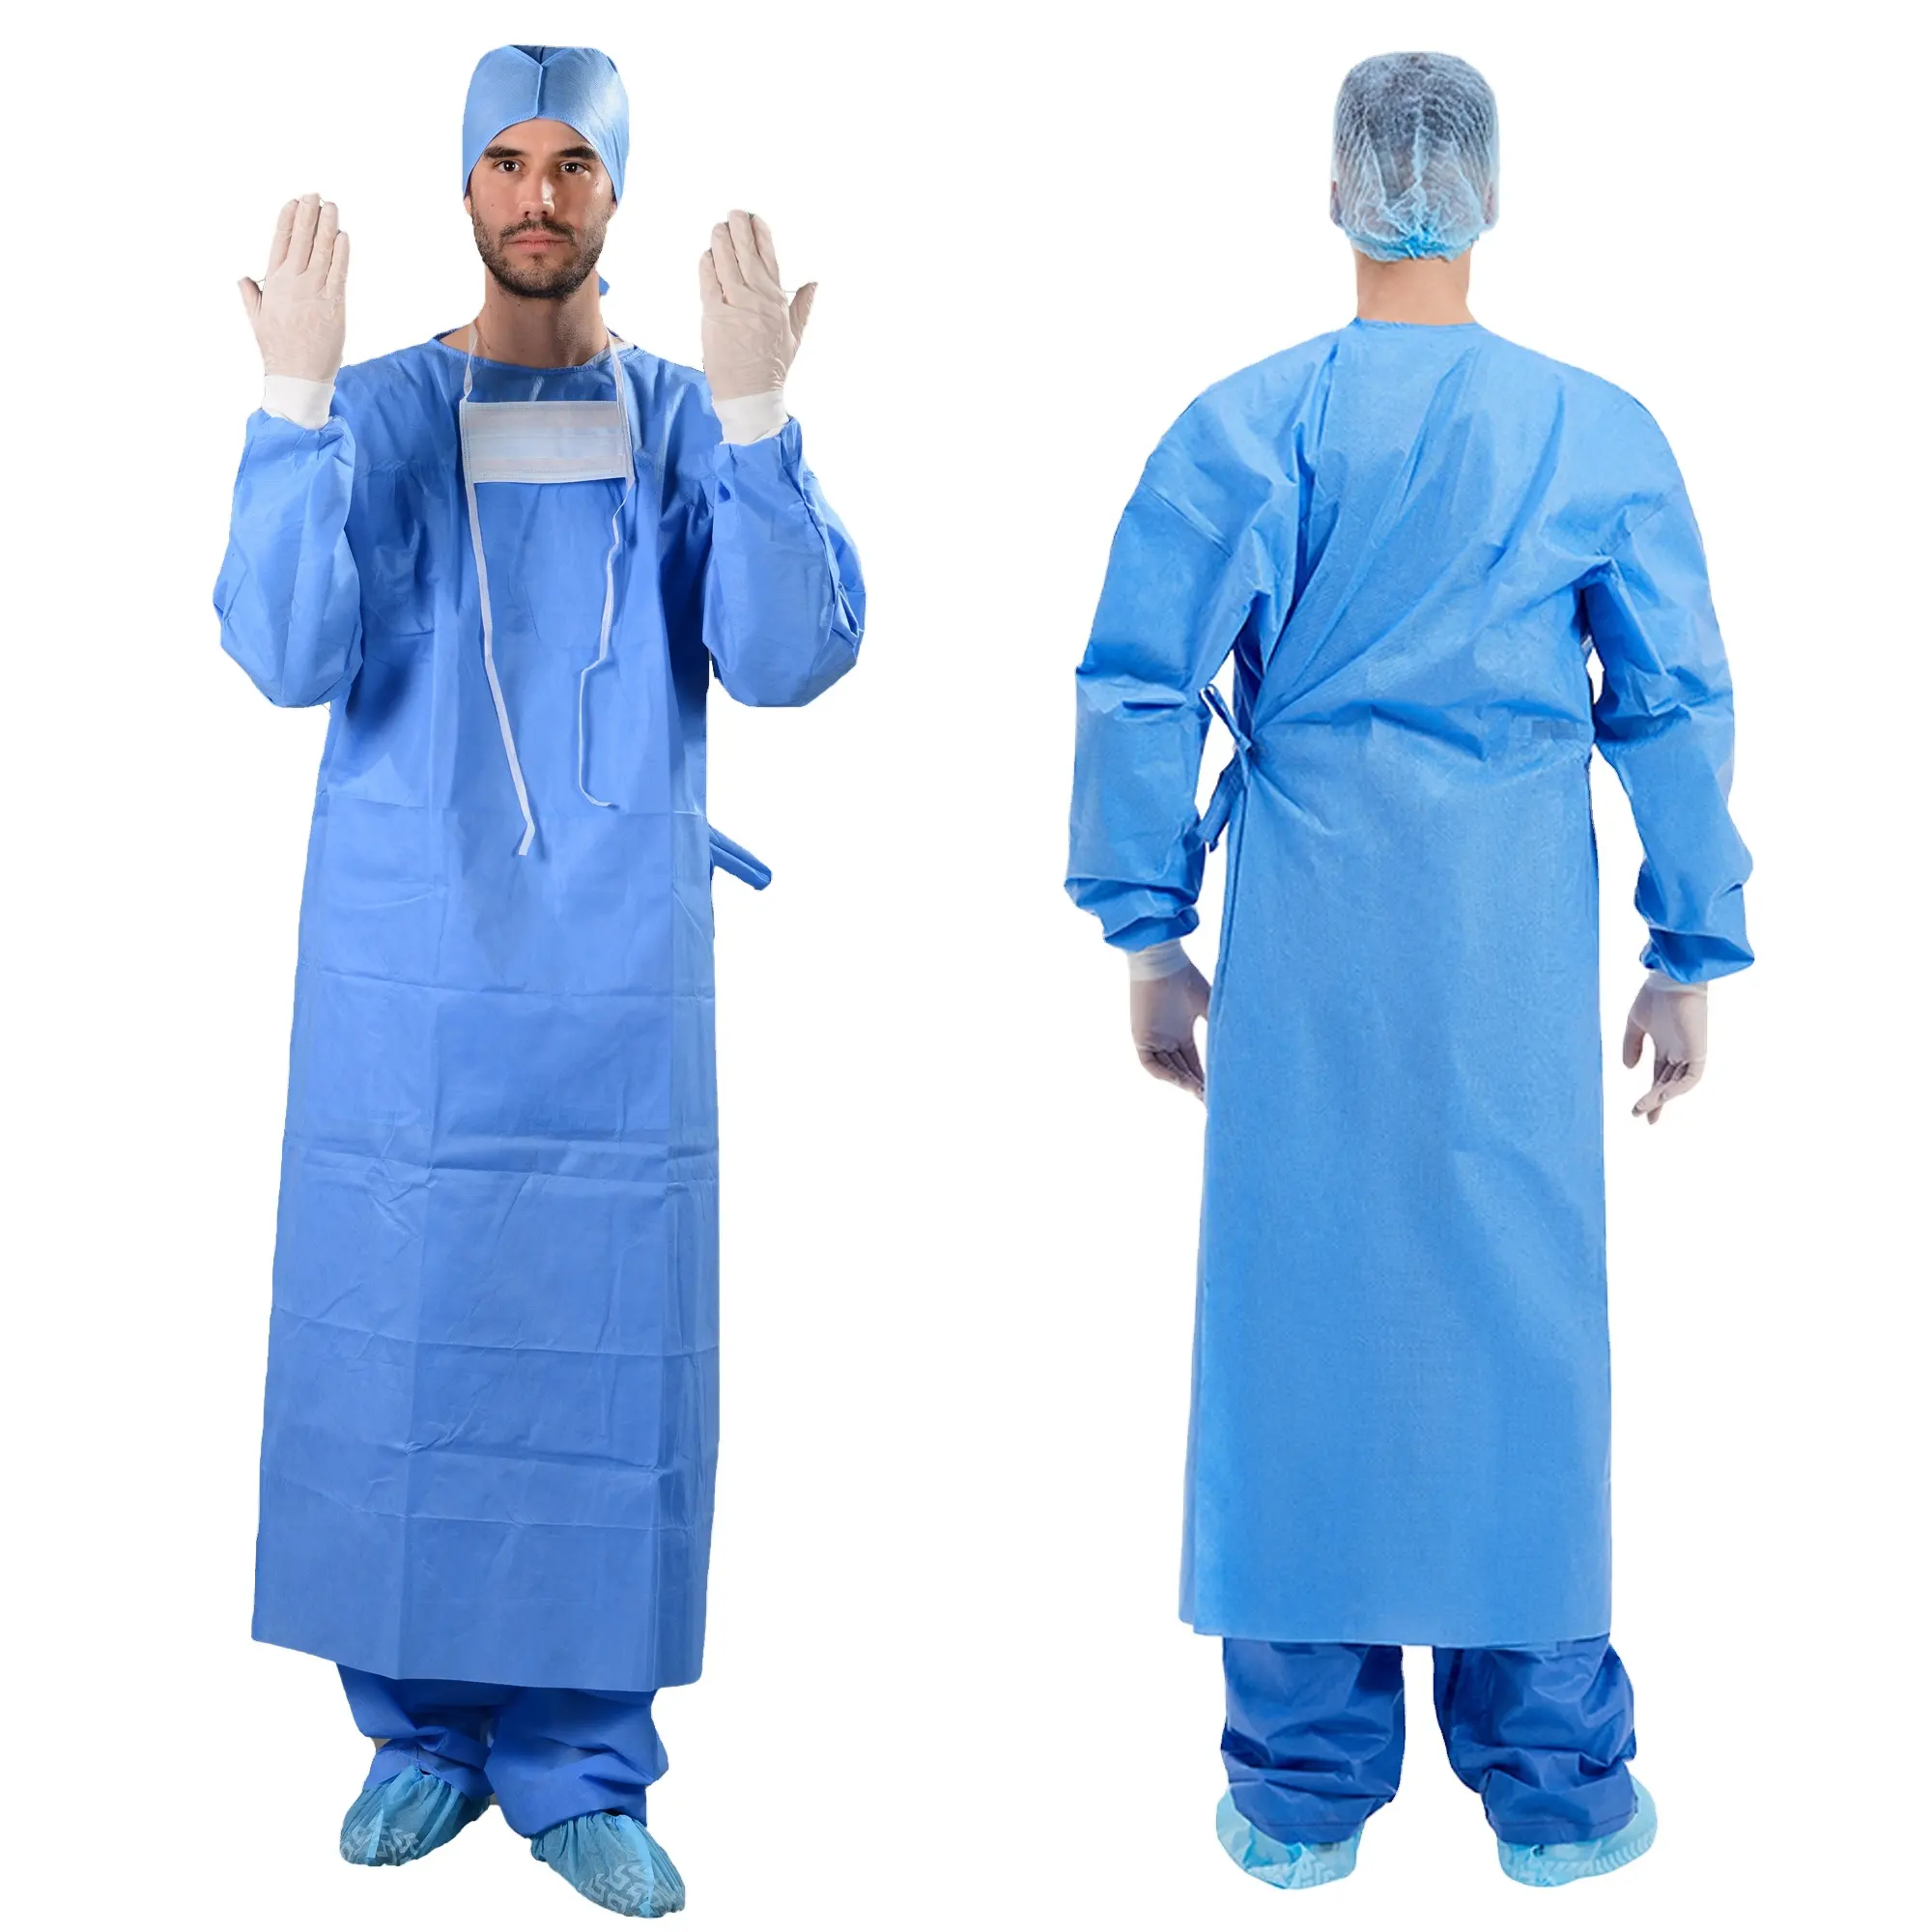 स्तर 1 2 3 थोक गैर बुना कपड़े चिकित्सा सर्जिकल गाउन एसएमएस सर्जिकल अलगाव कस्टम डिजाइन डिस्पोजेबल निविड़ अंधकार गाउन